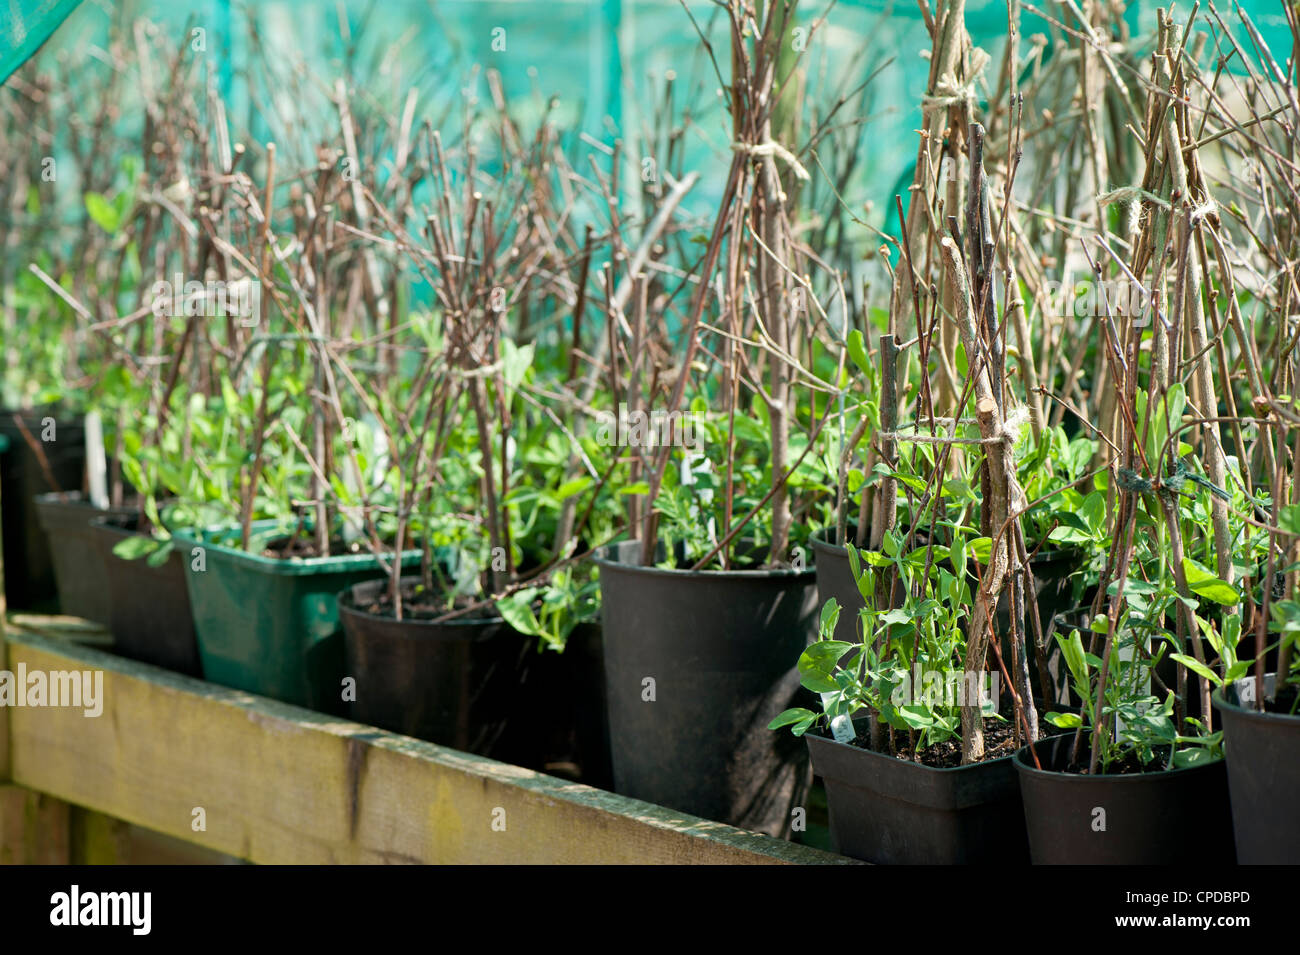 Young Sweet Pea plants, Lathyrus odoratus ' Wild Italian' Stock Photo